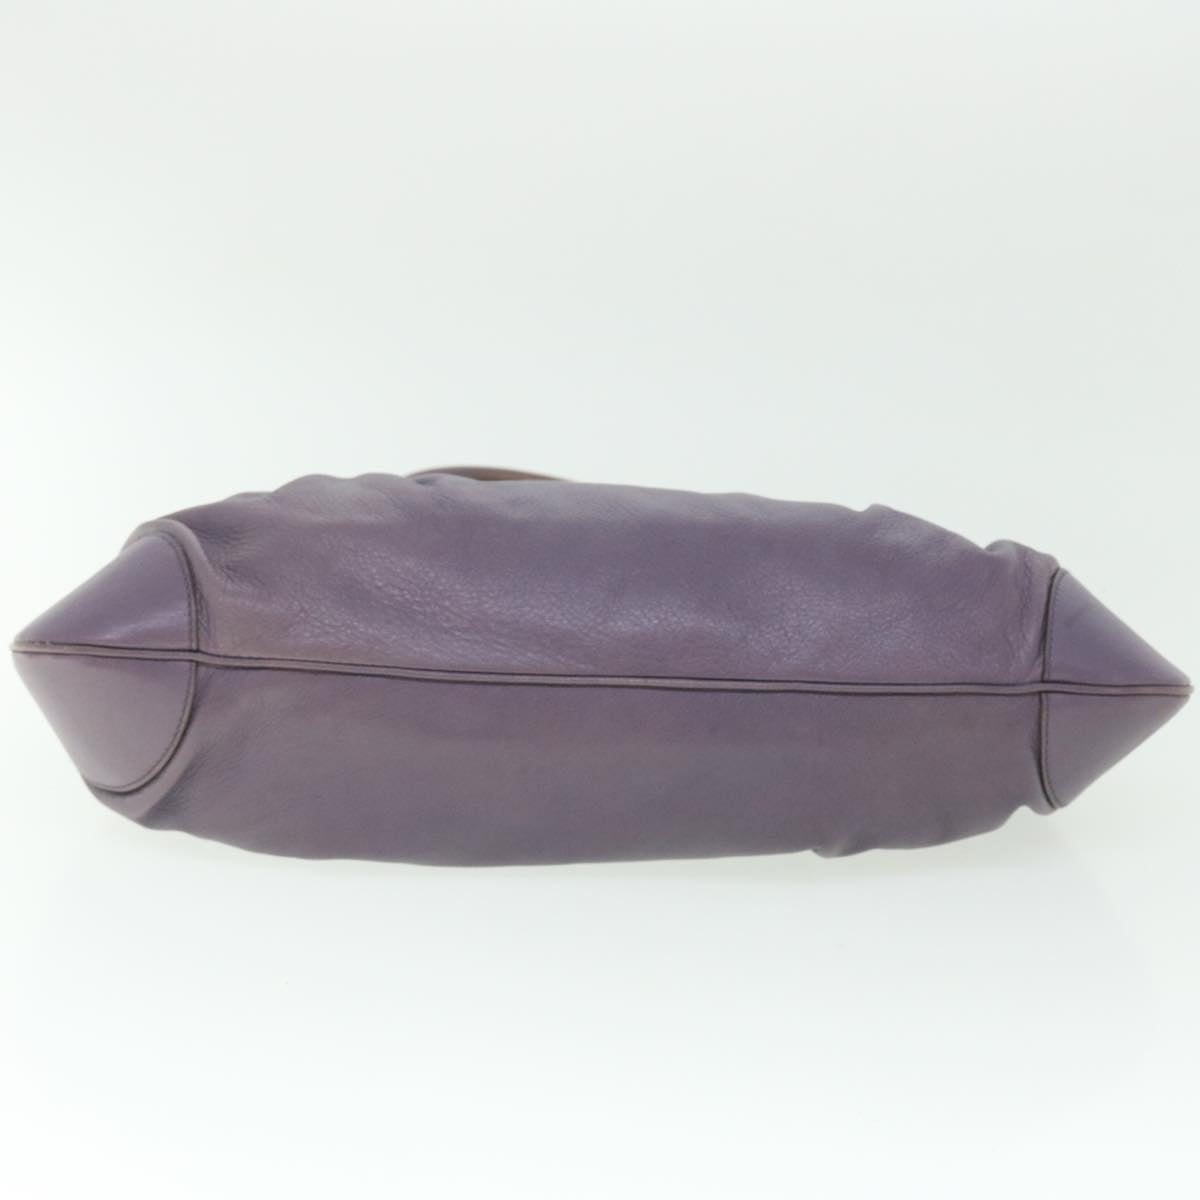 Salvatore Ferragamo Gancini Shoulder Bag Leather Purple Auth 50590